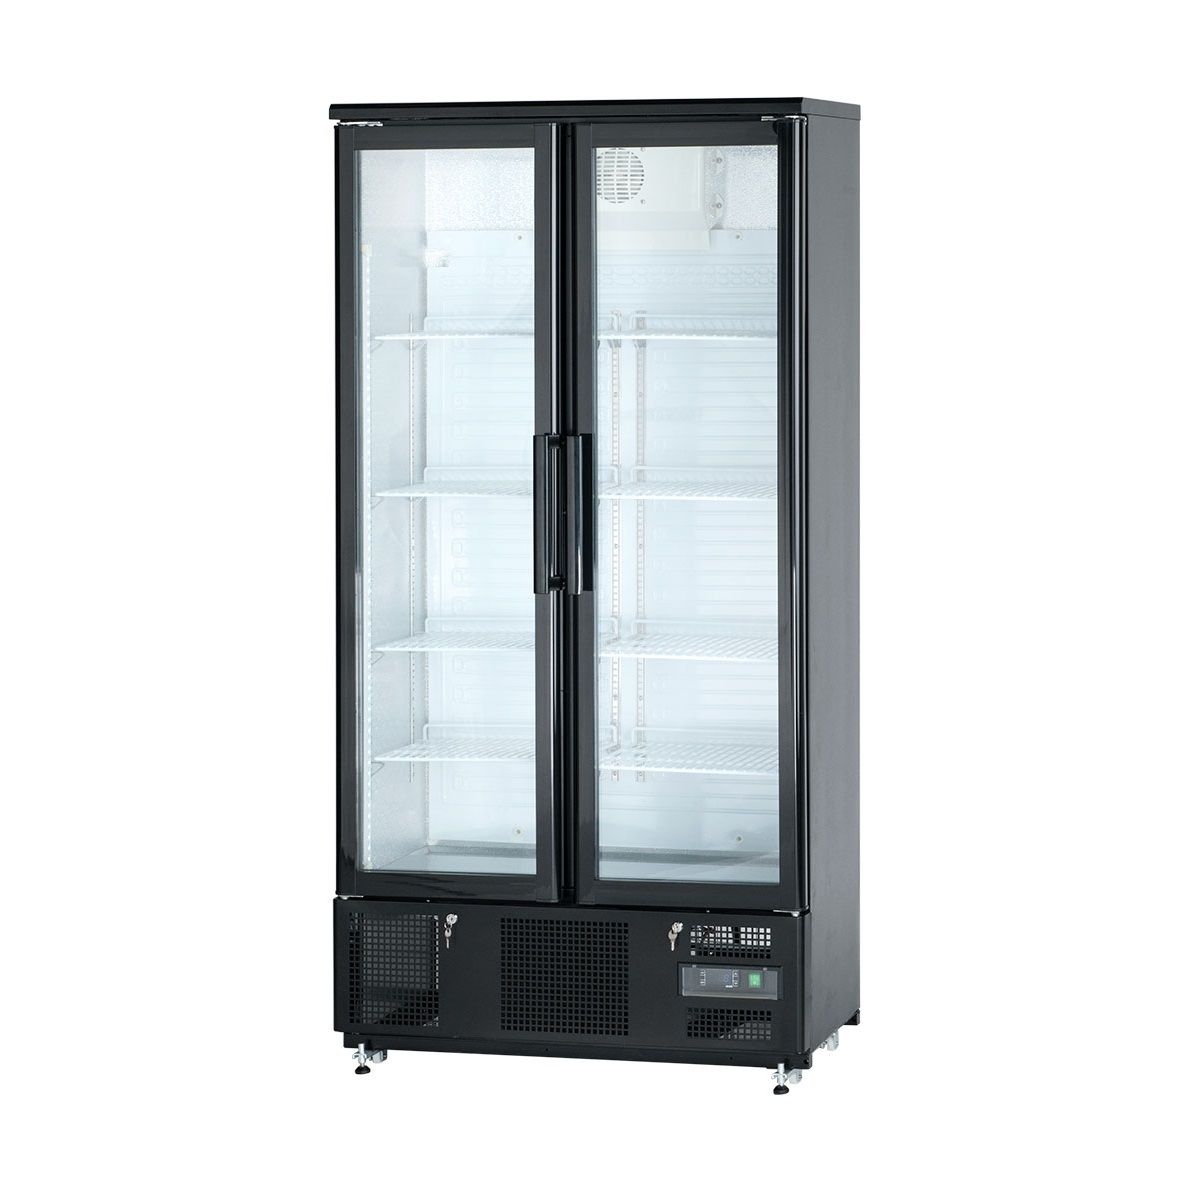 Холодильник шкаф витрина. Холодильный шкаф витринного типа GASTRORAG sc316g.a. Шкаф холодильник Sagi as65. Шкаф холодильный барный Cooleq bf-150. Шкаф холодильный Брискли 5 черный.